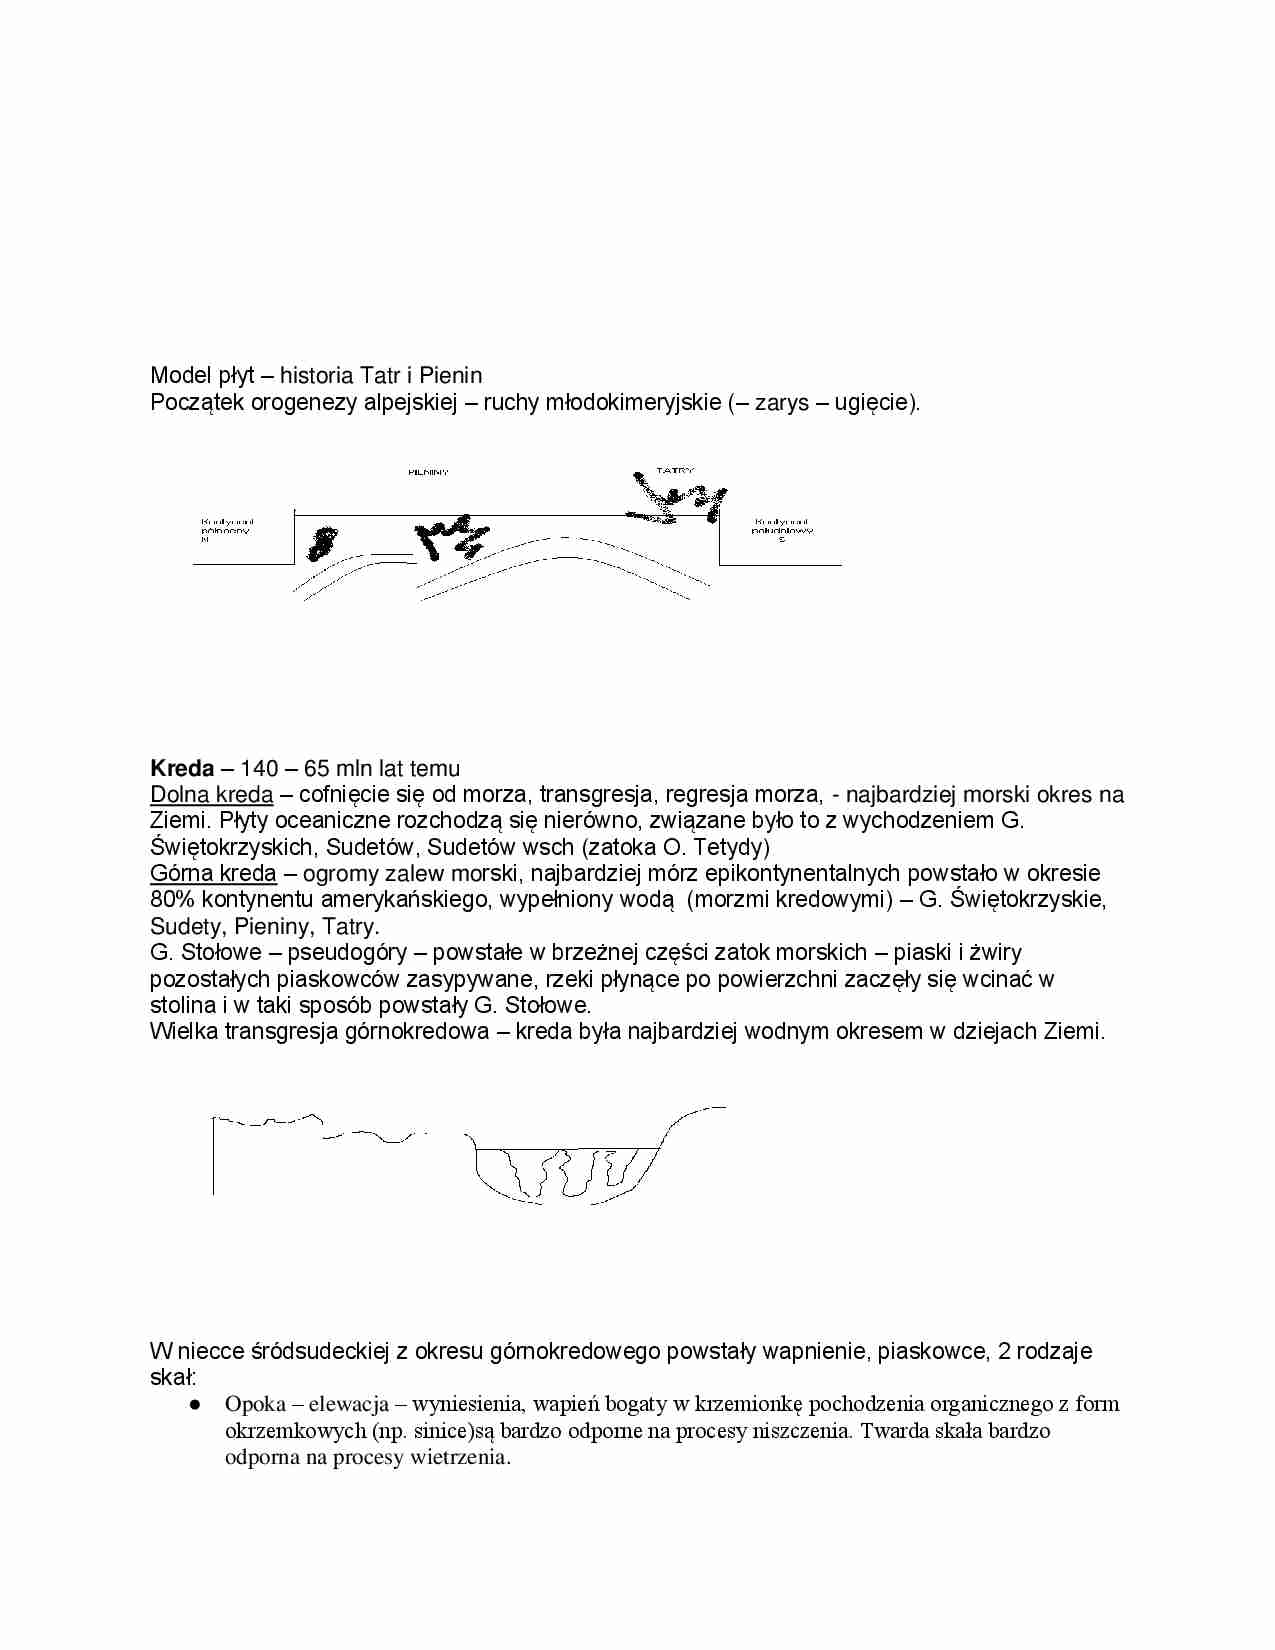 Model płyt - historia Tatr i Pienin  - strona 1